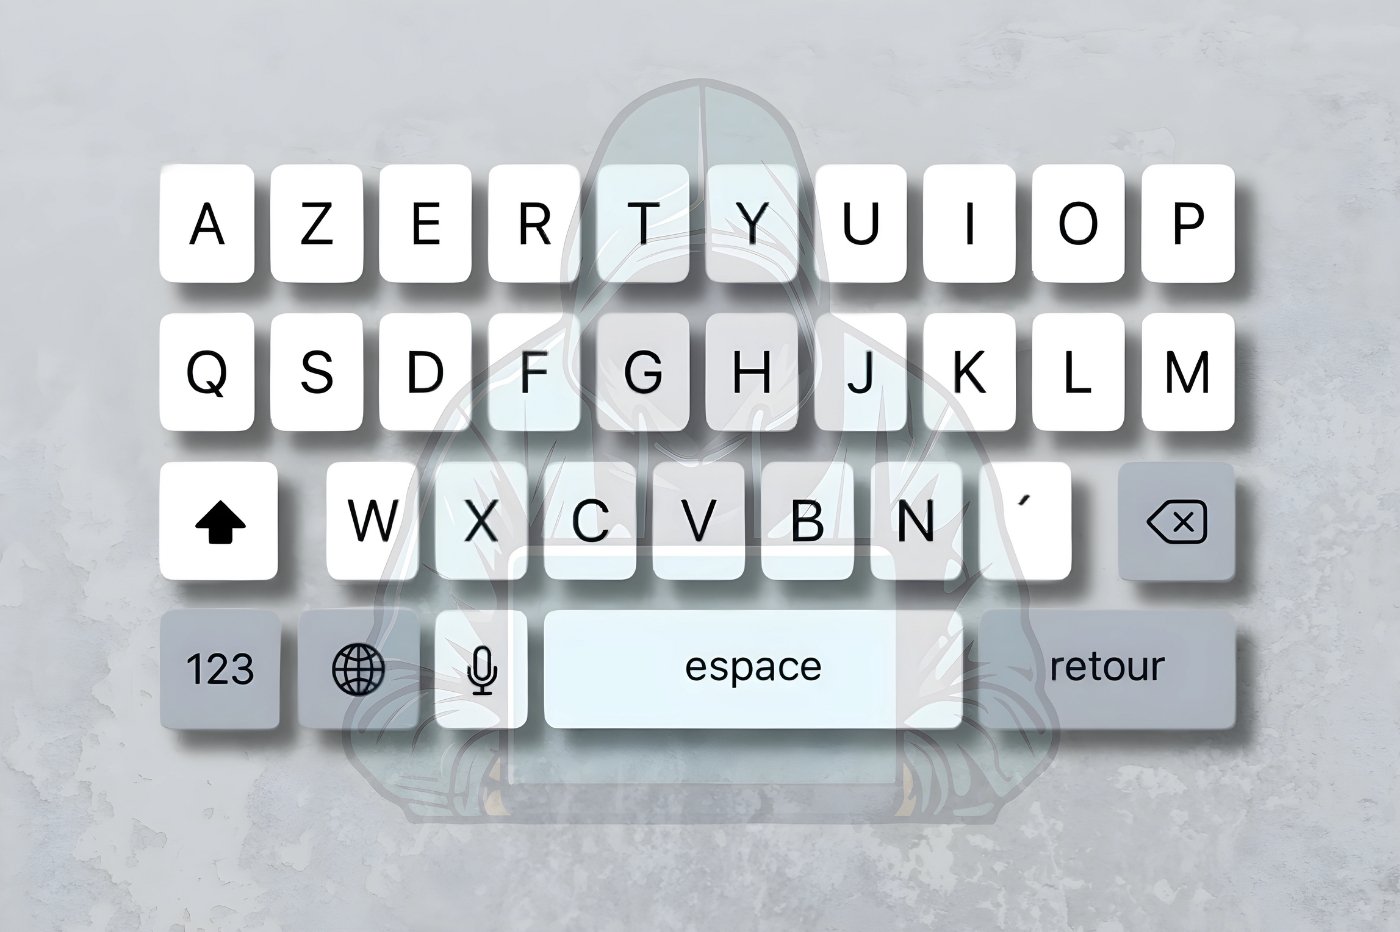 Piratage clavier ios iPhone par iphon.fr